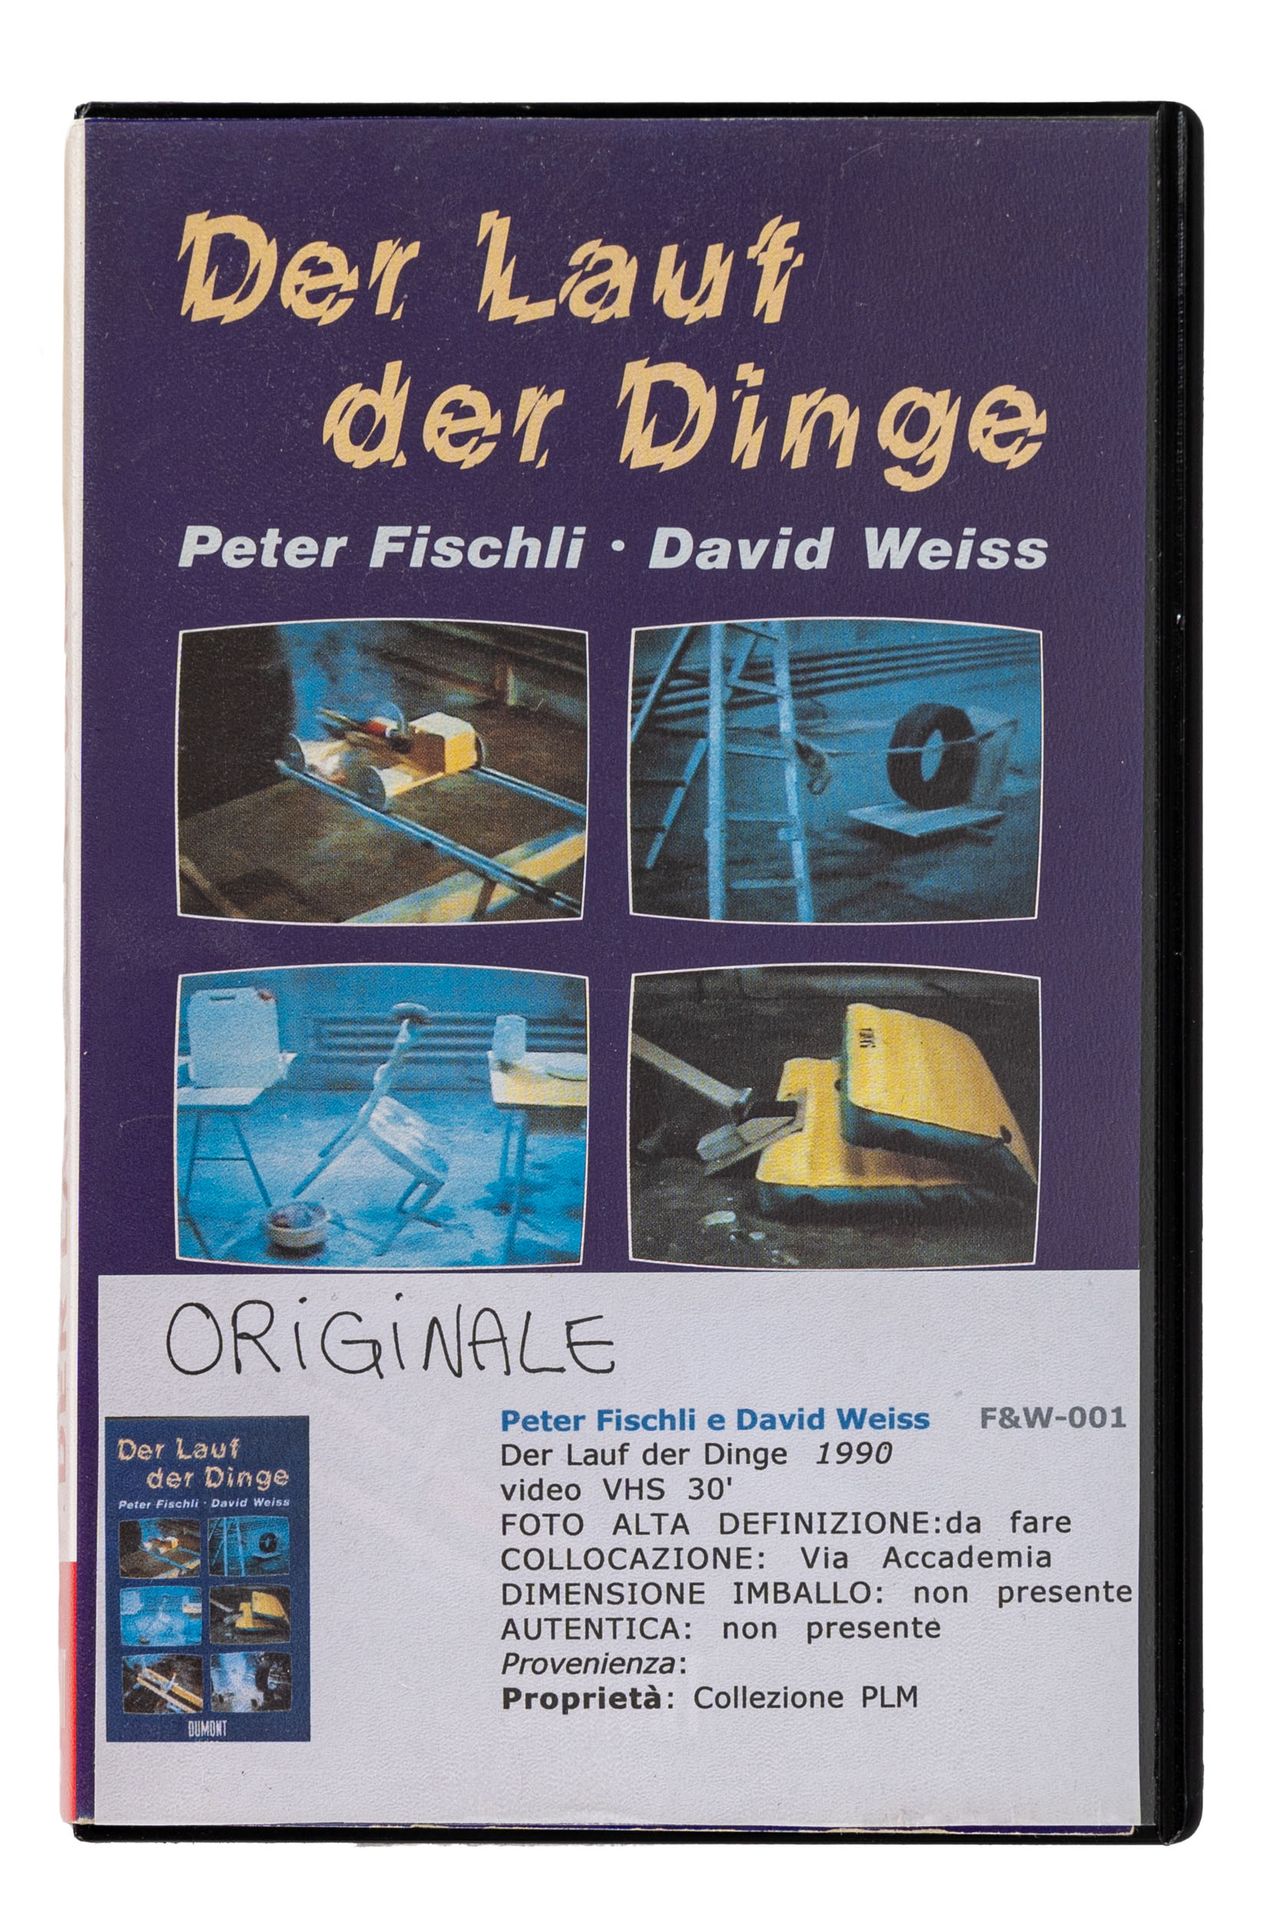 Null Fischli Peter and Weiss David

舞蹈表演

1990

视频VHS，时长30分钟

19.5 x 12.5 x 3厘米
&hellip;